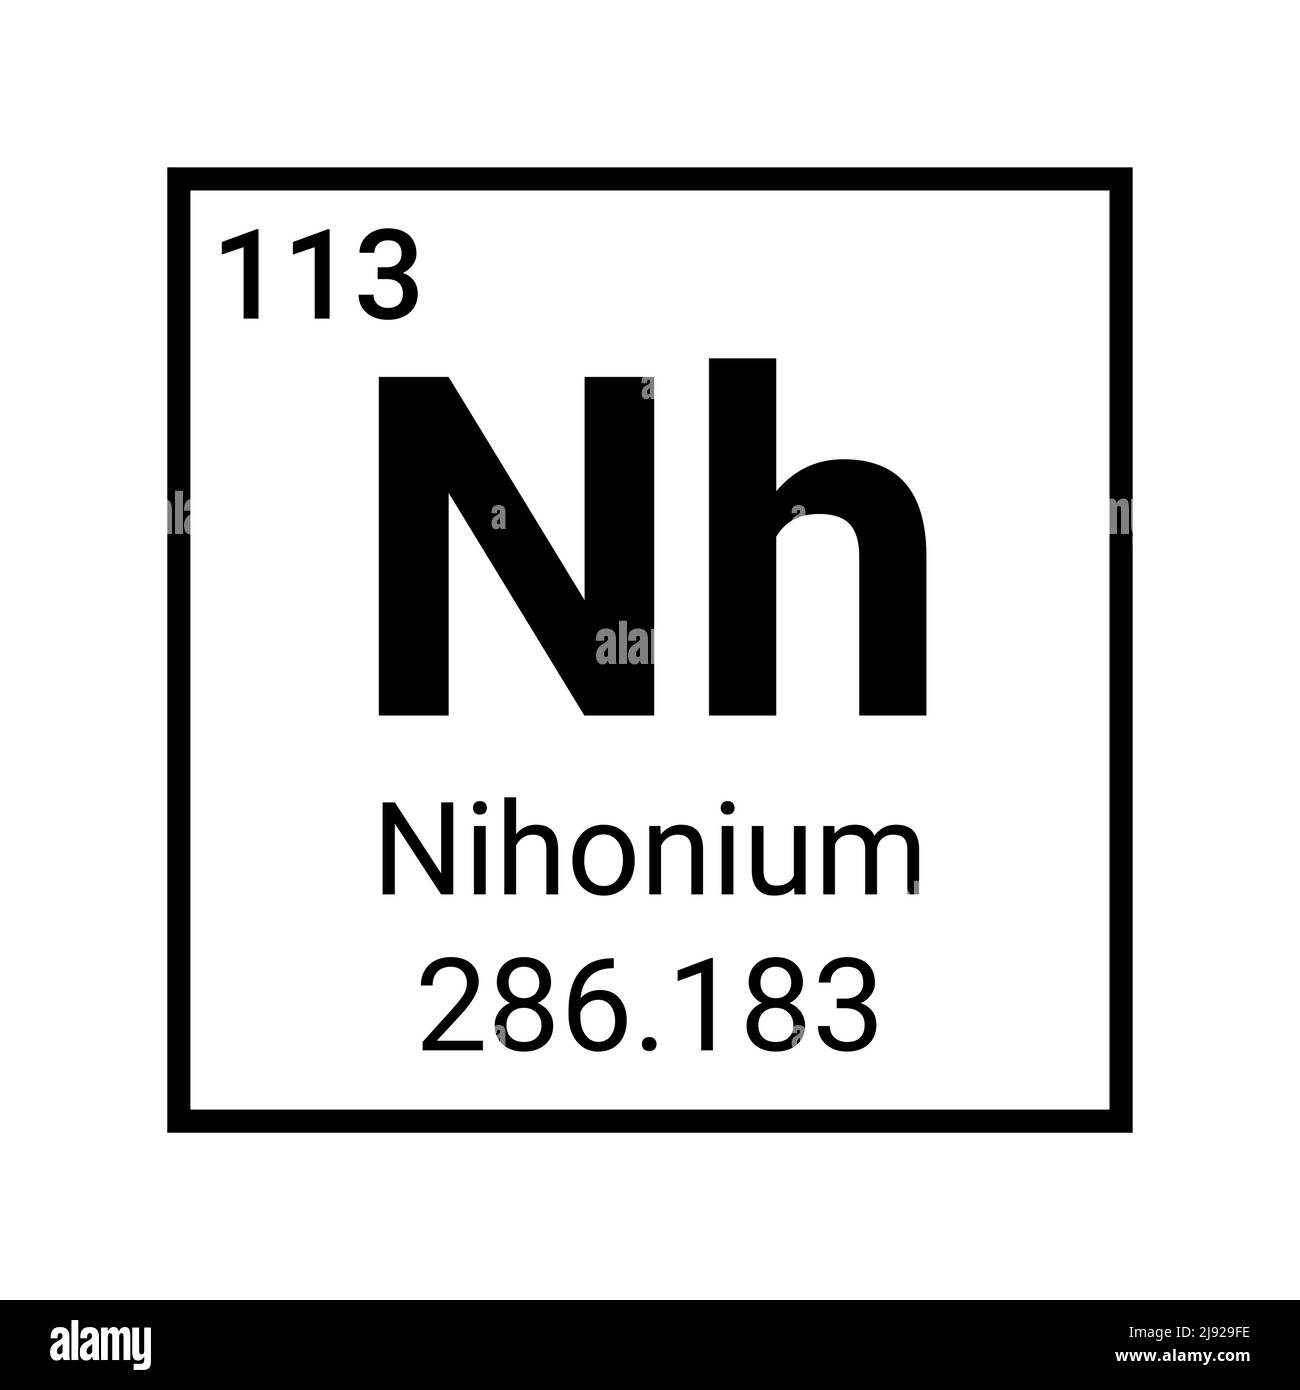 Nihonium periodic table element. Science atomic symbol icon Stock Vector